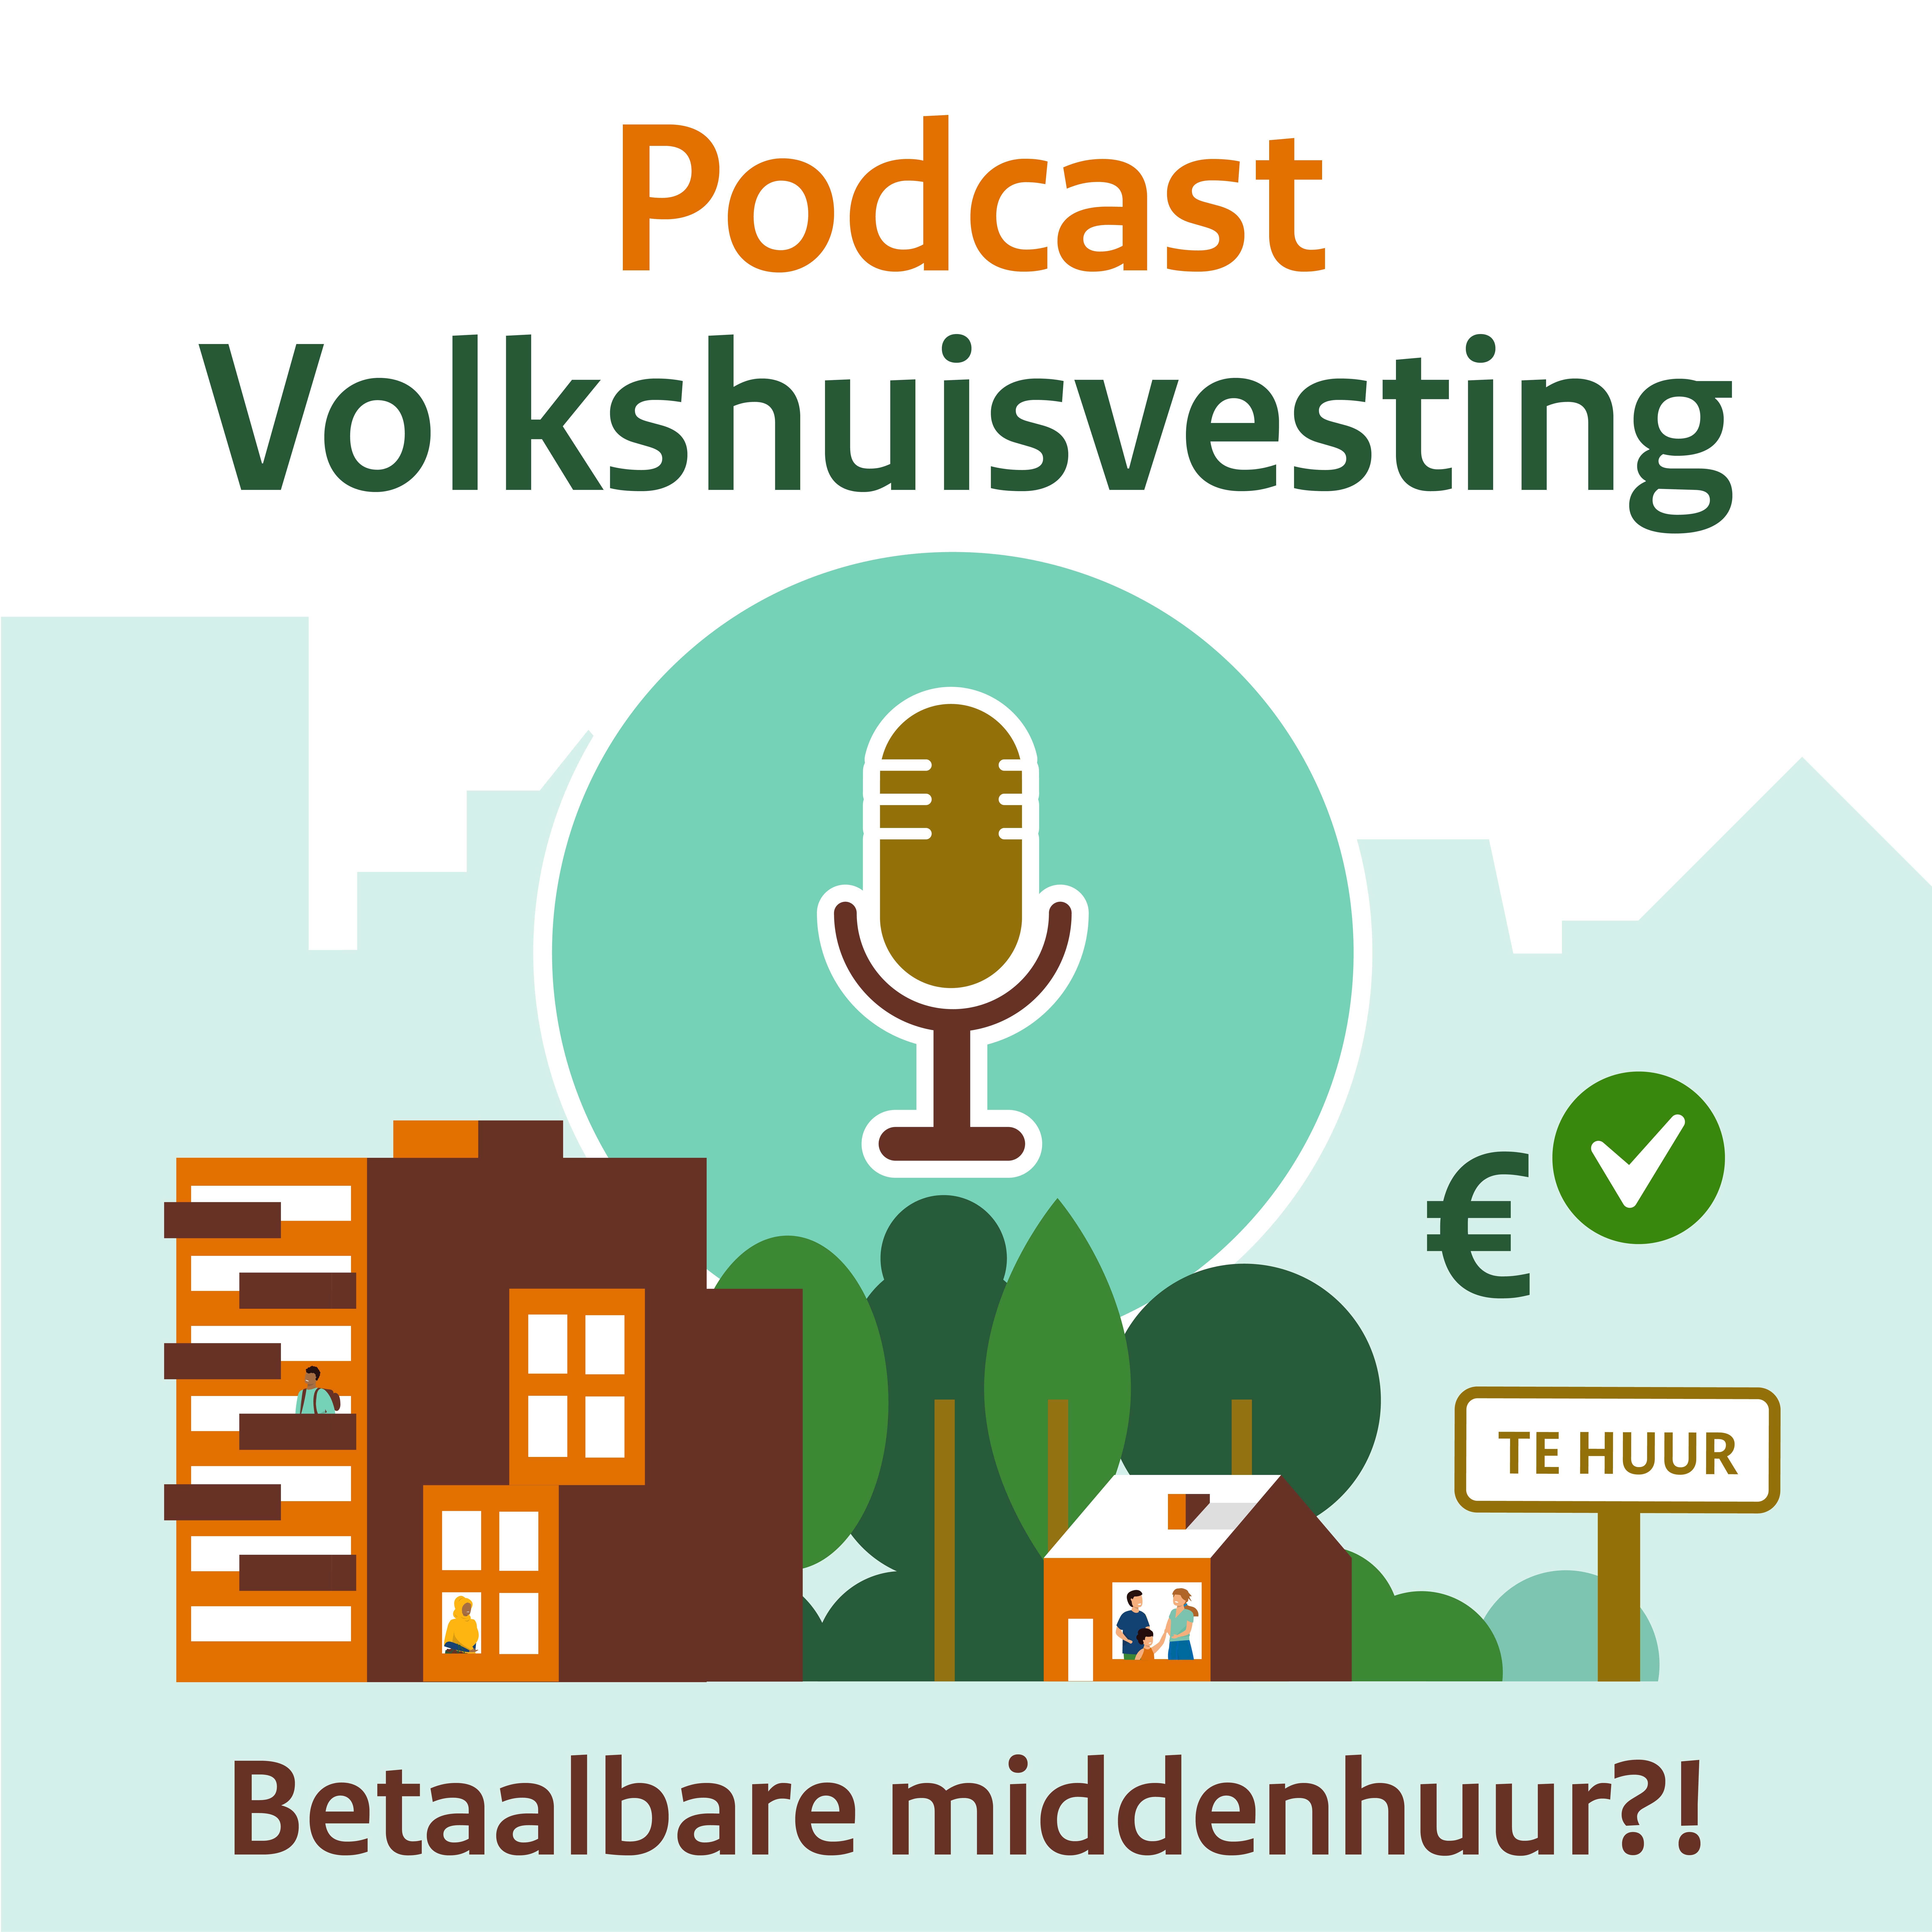 Podcastserie Betaalbare middenhuur?! voor ministerie BZK